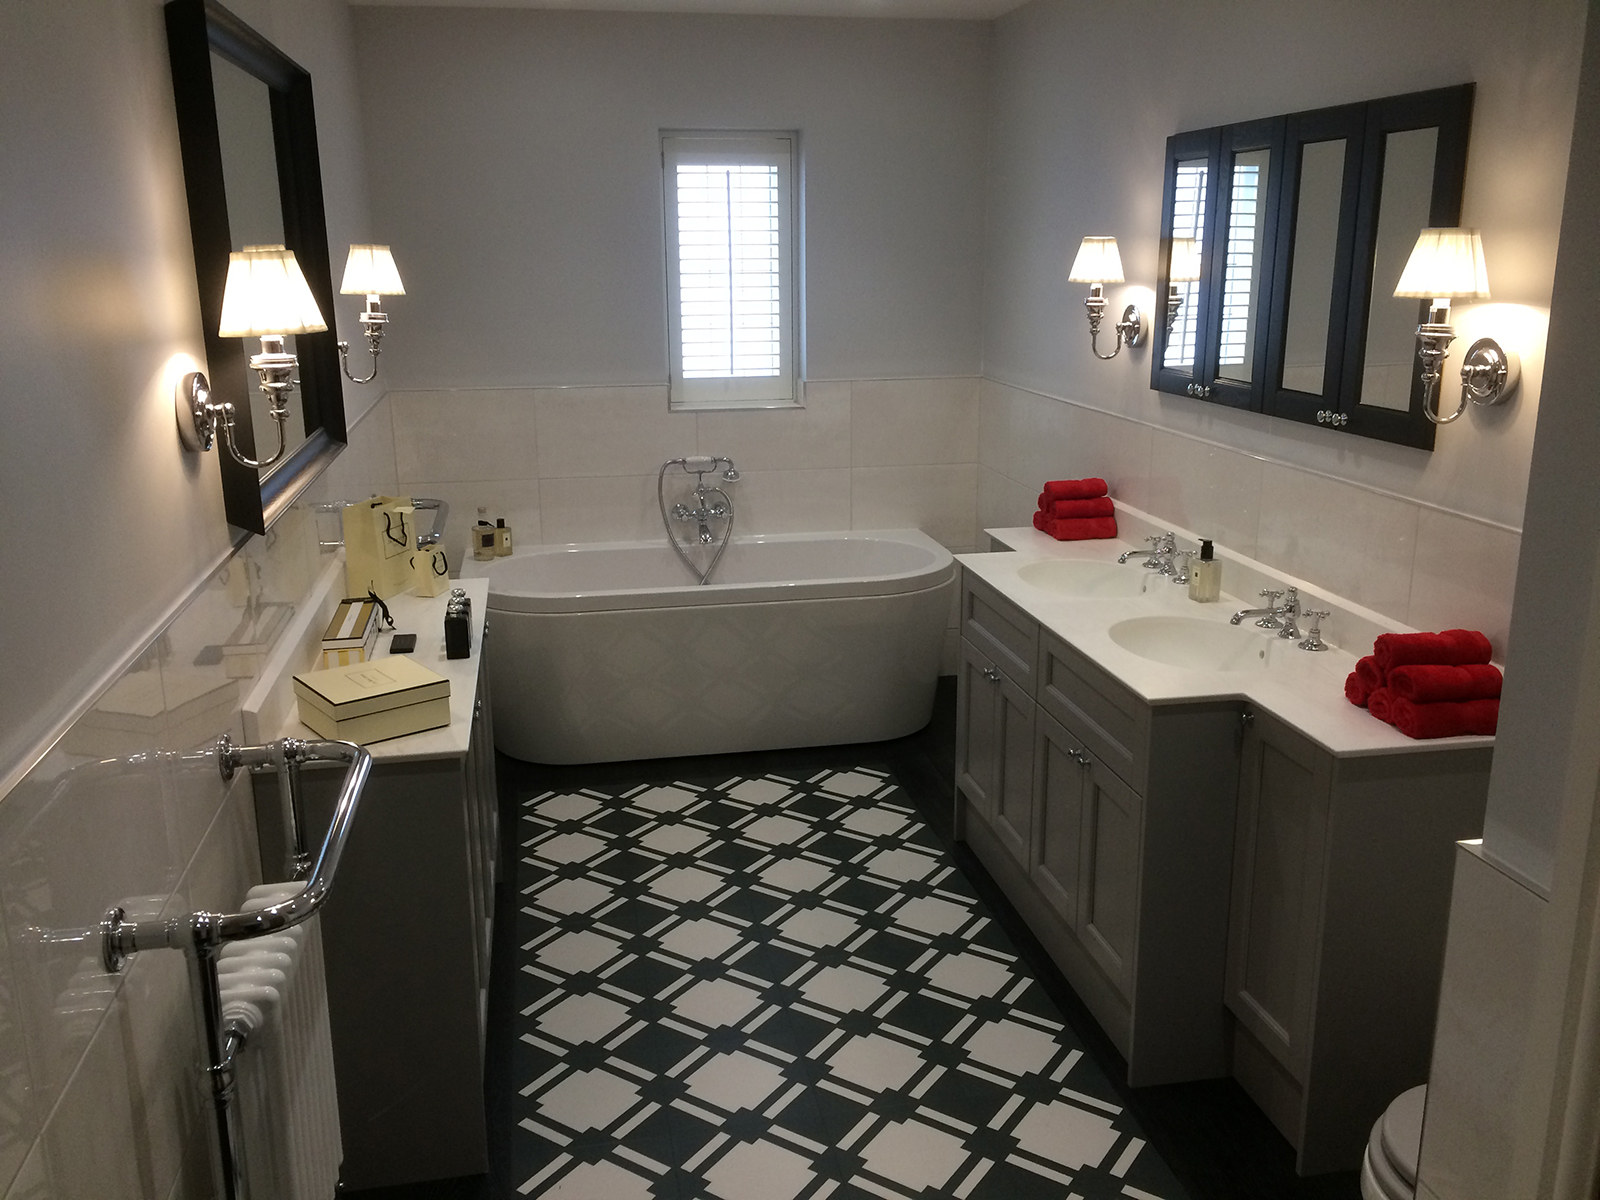 Recent Bathroom/Shower room completed 2018